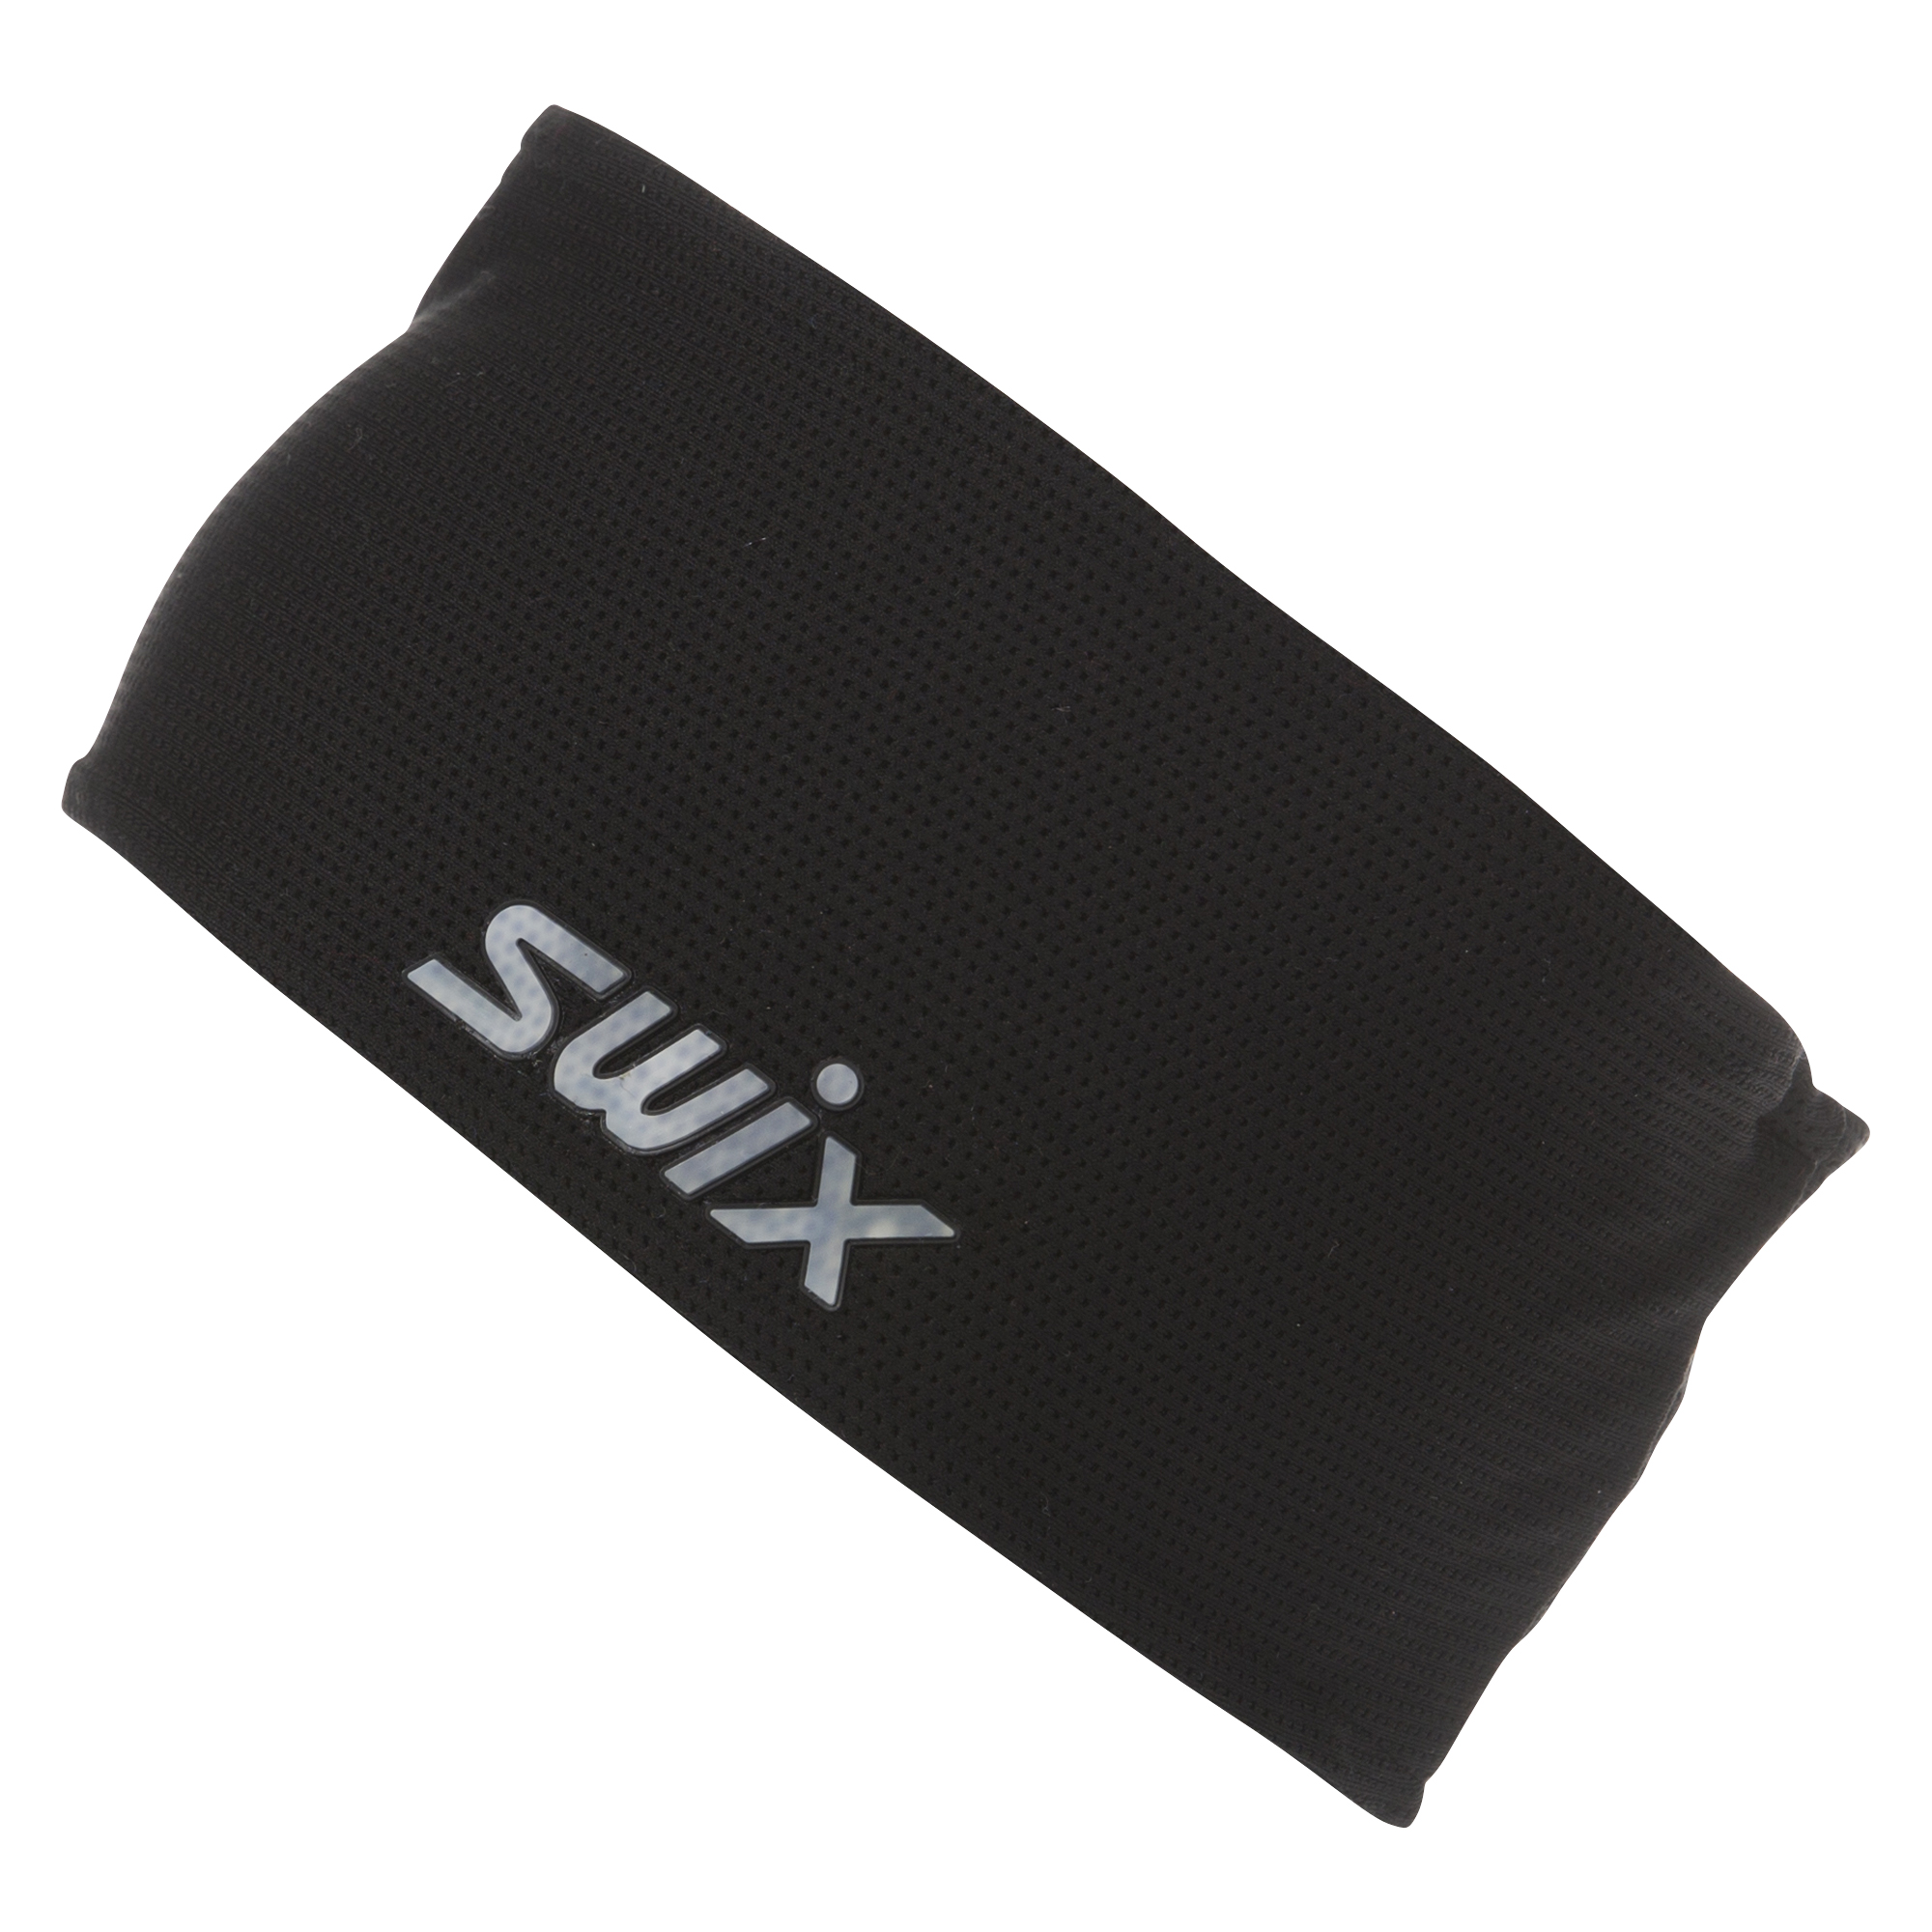 Swix Race ultra light headband-0